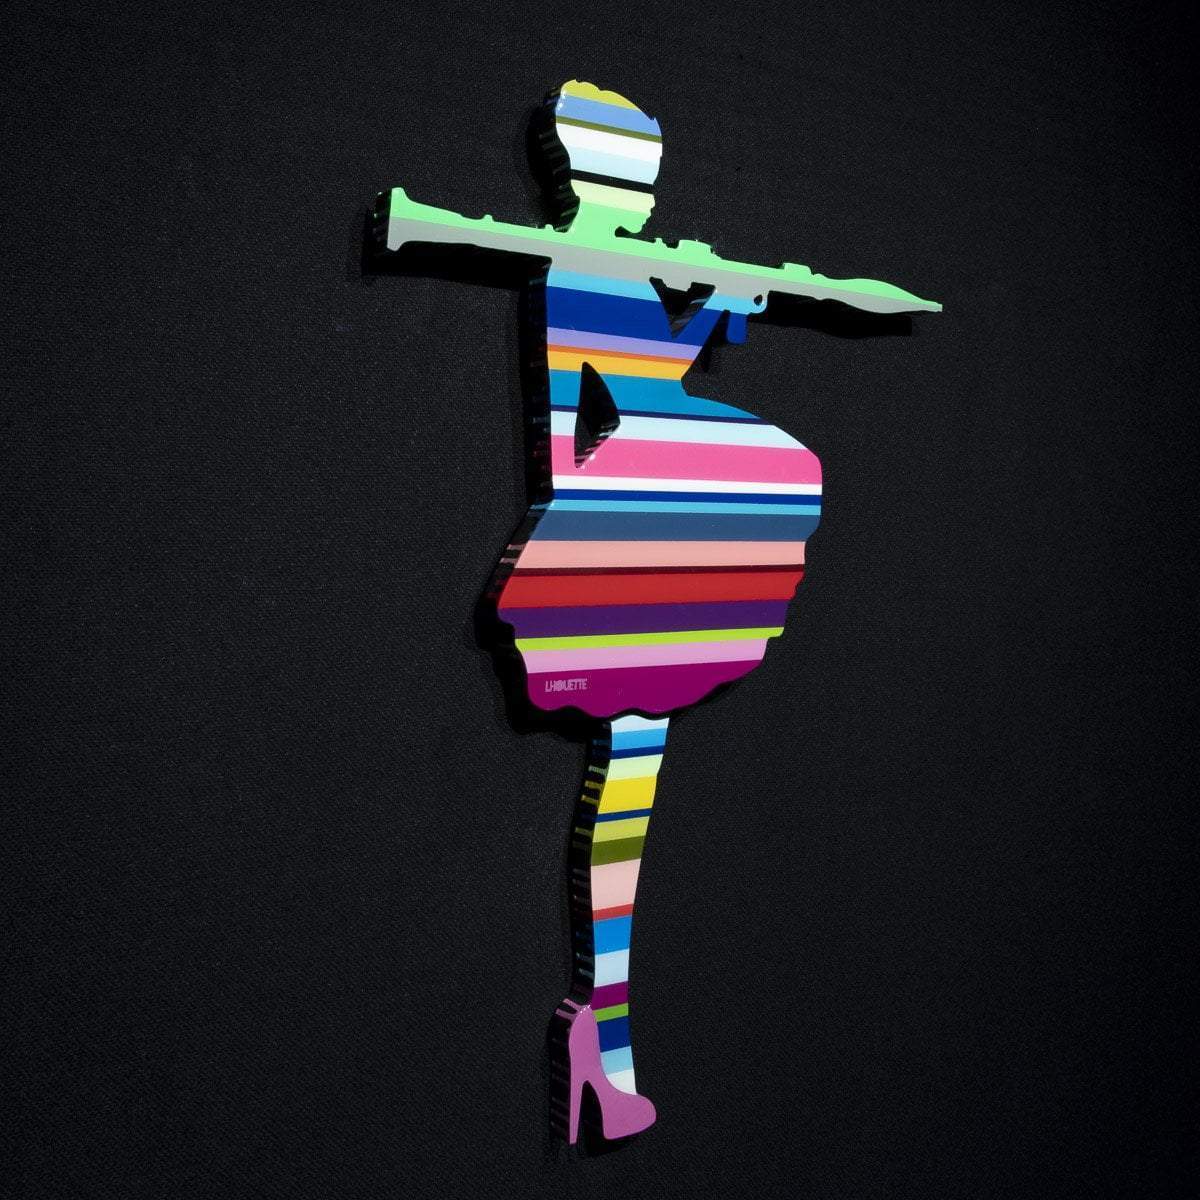 Bazooka Jo Miniature - Striped - Original Wall Sculpture Lhouette Original